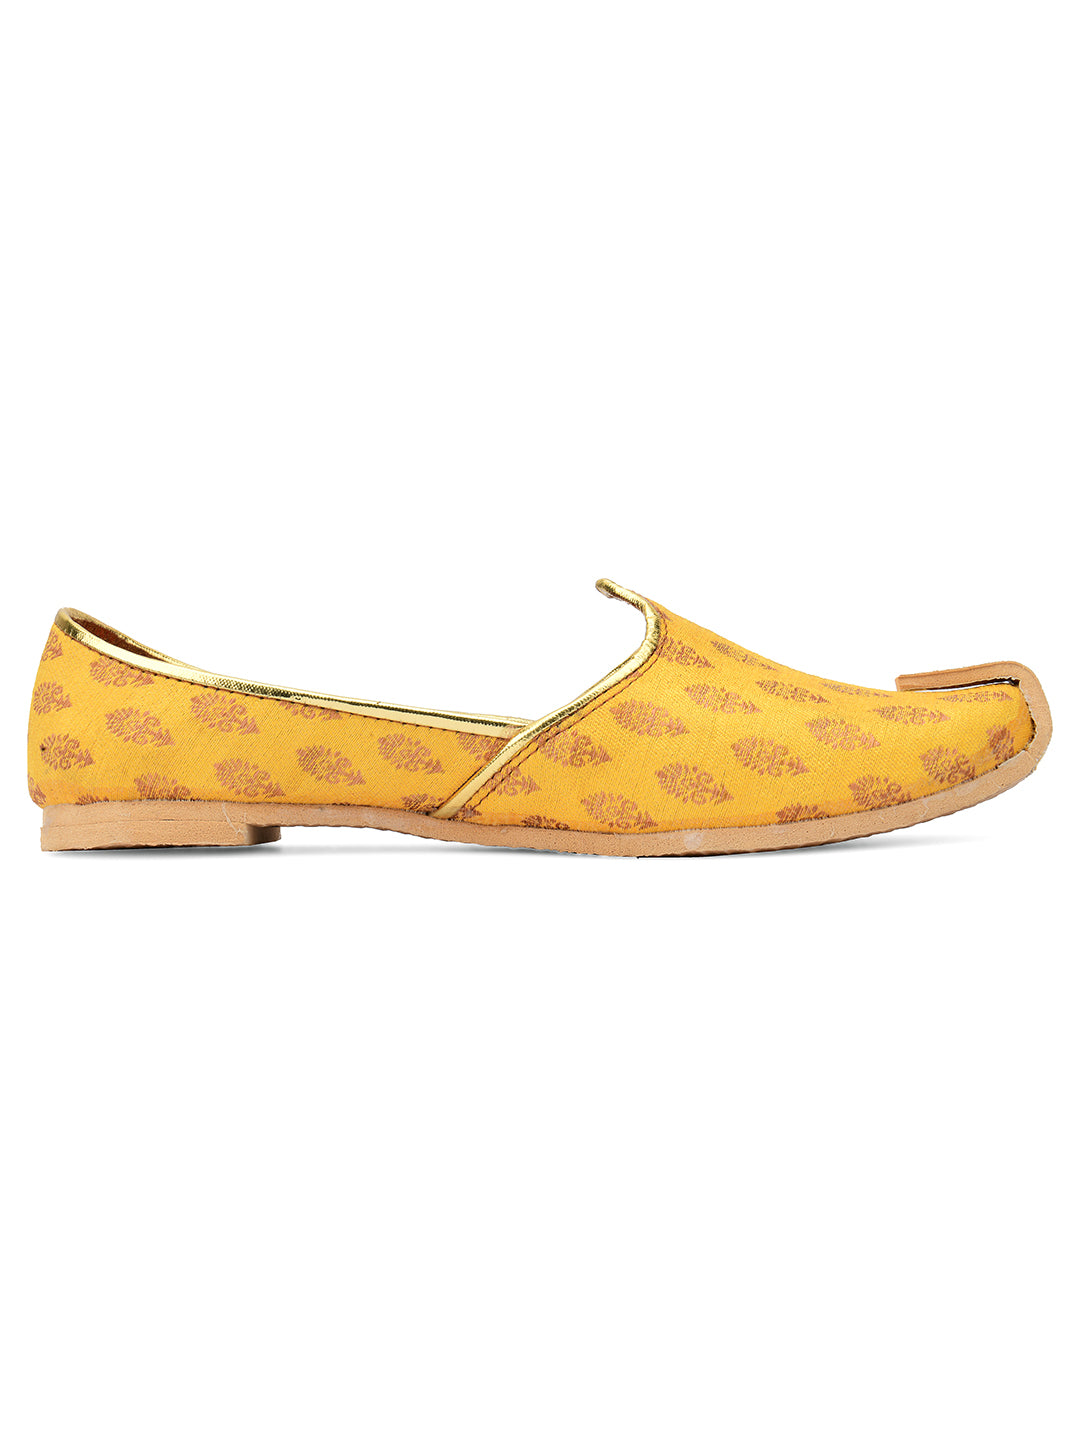 Men's Indian Ethnic Party Wear Yellow Footwear - Desi Colour